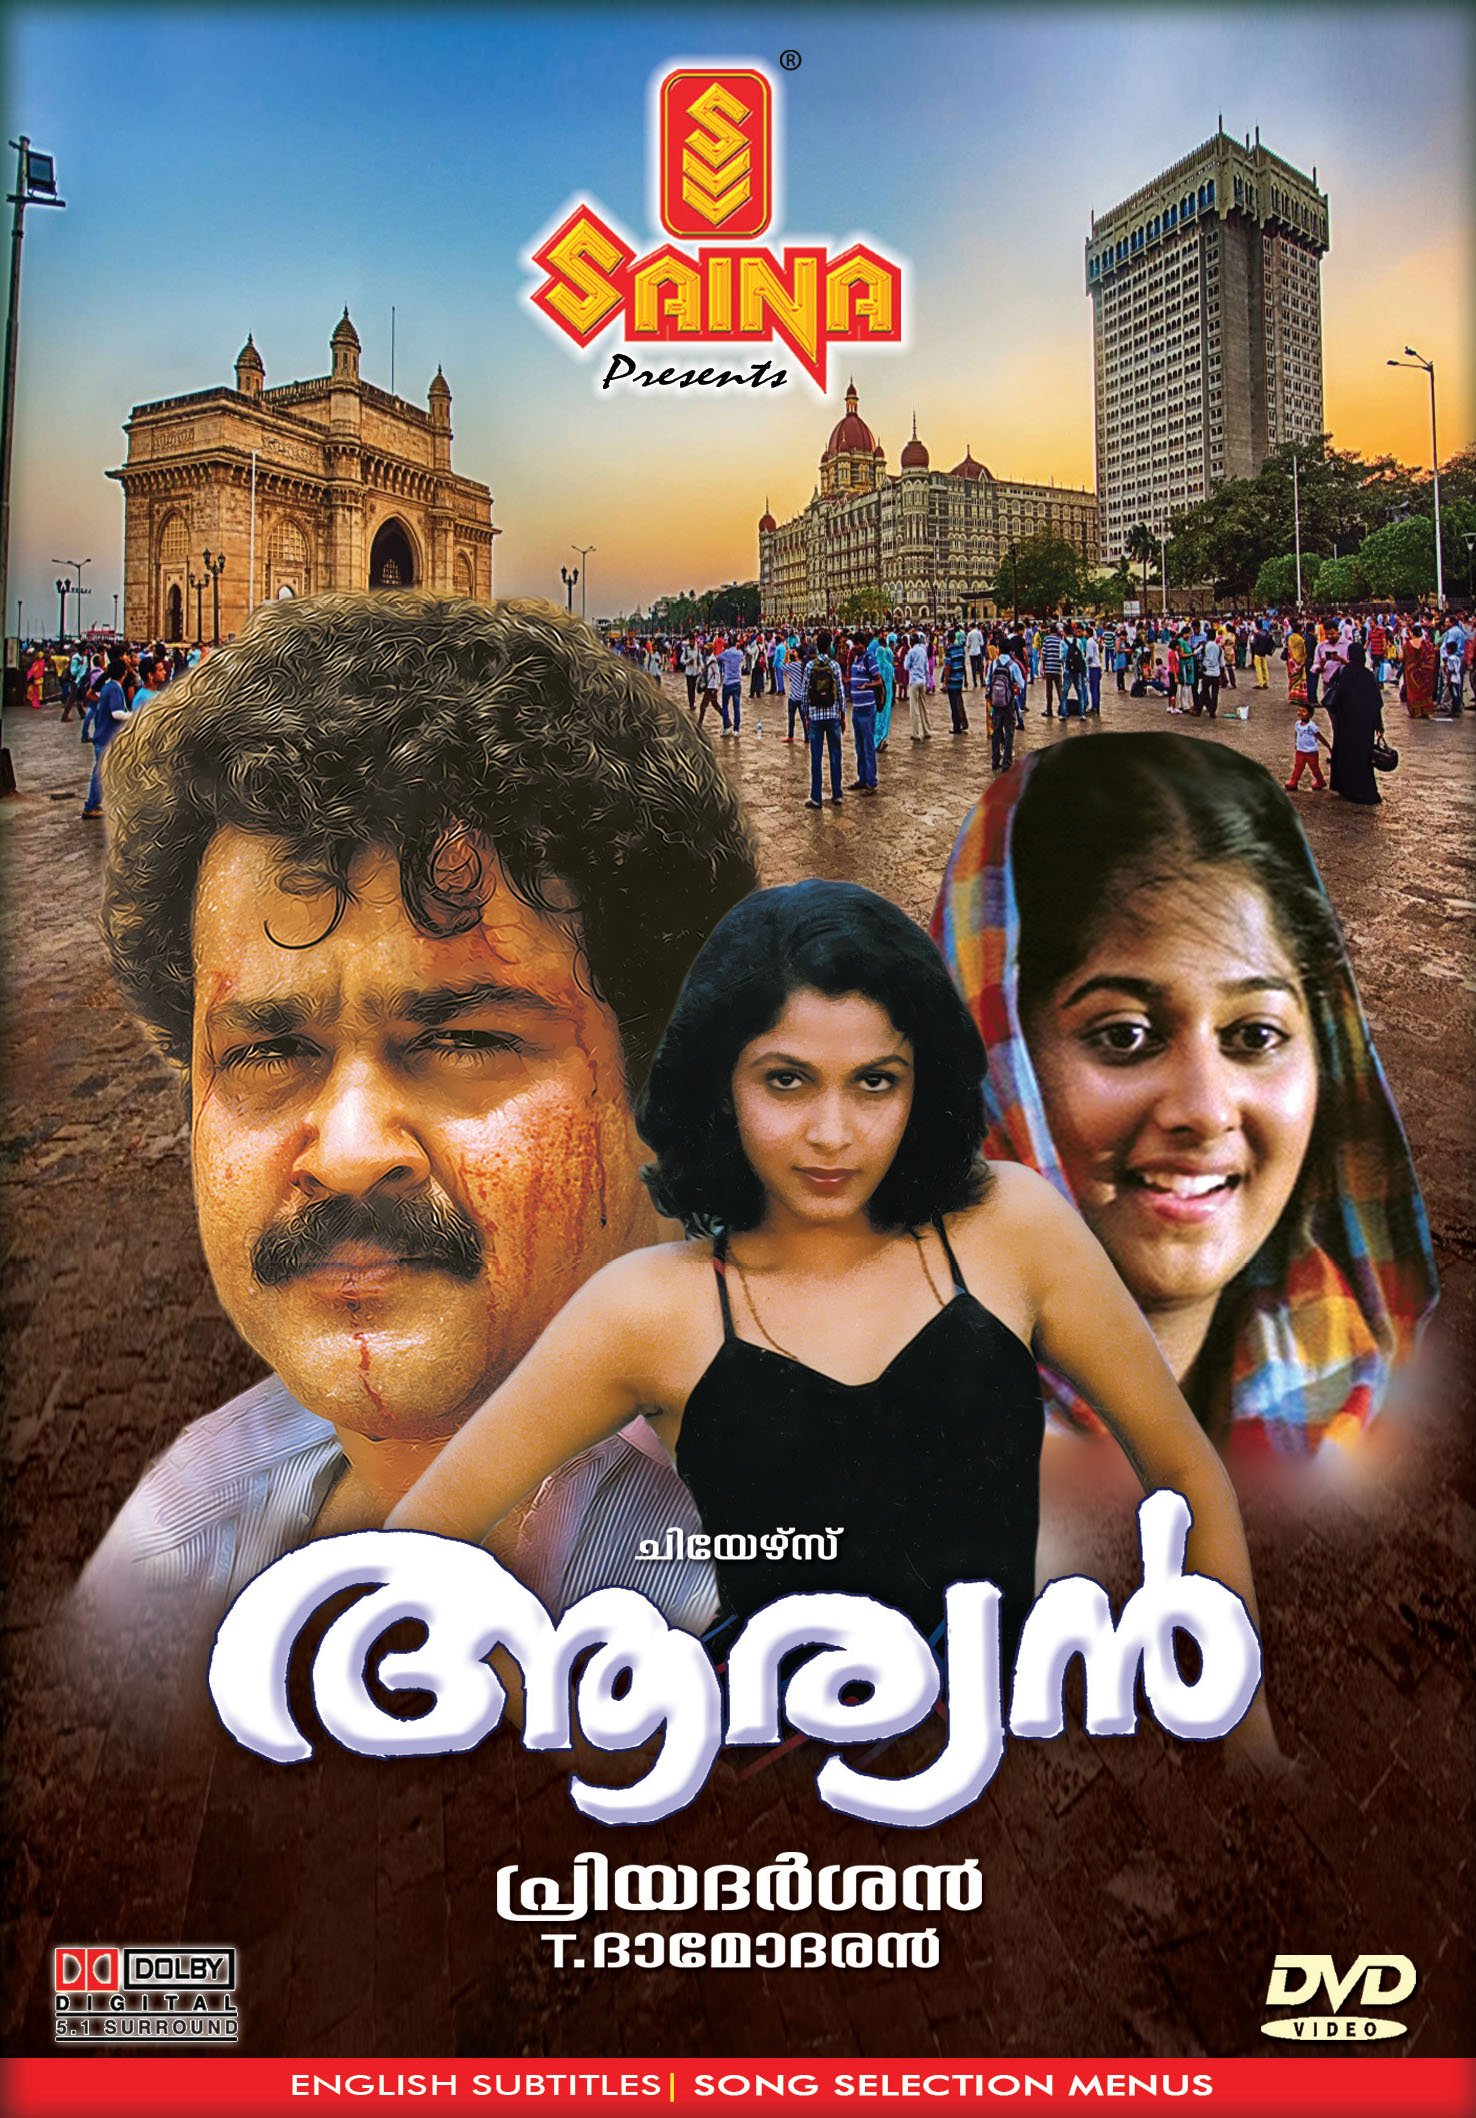 aryan-malayalam-movie-purchase-or-watch-online